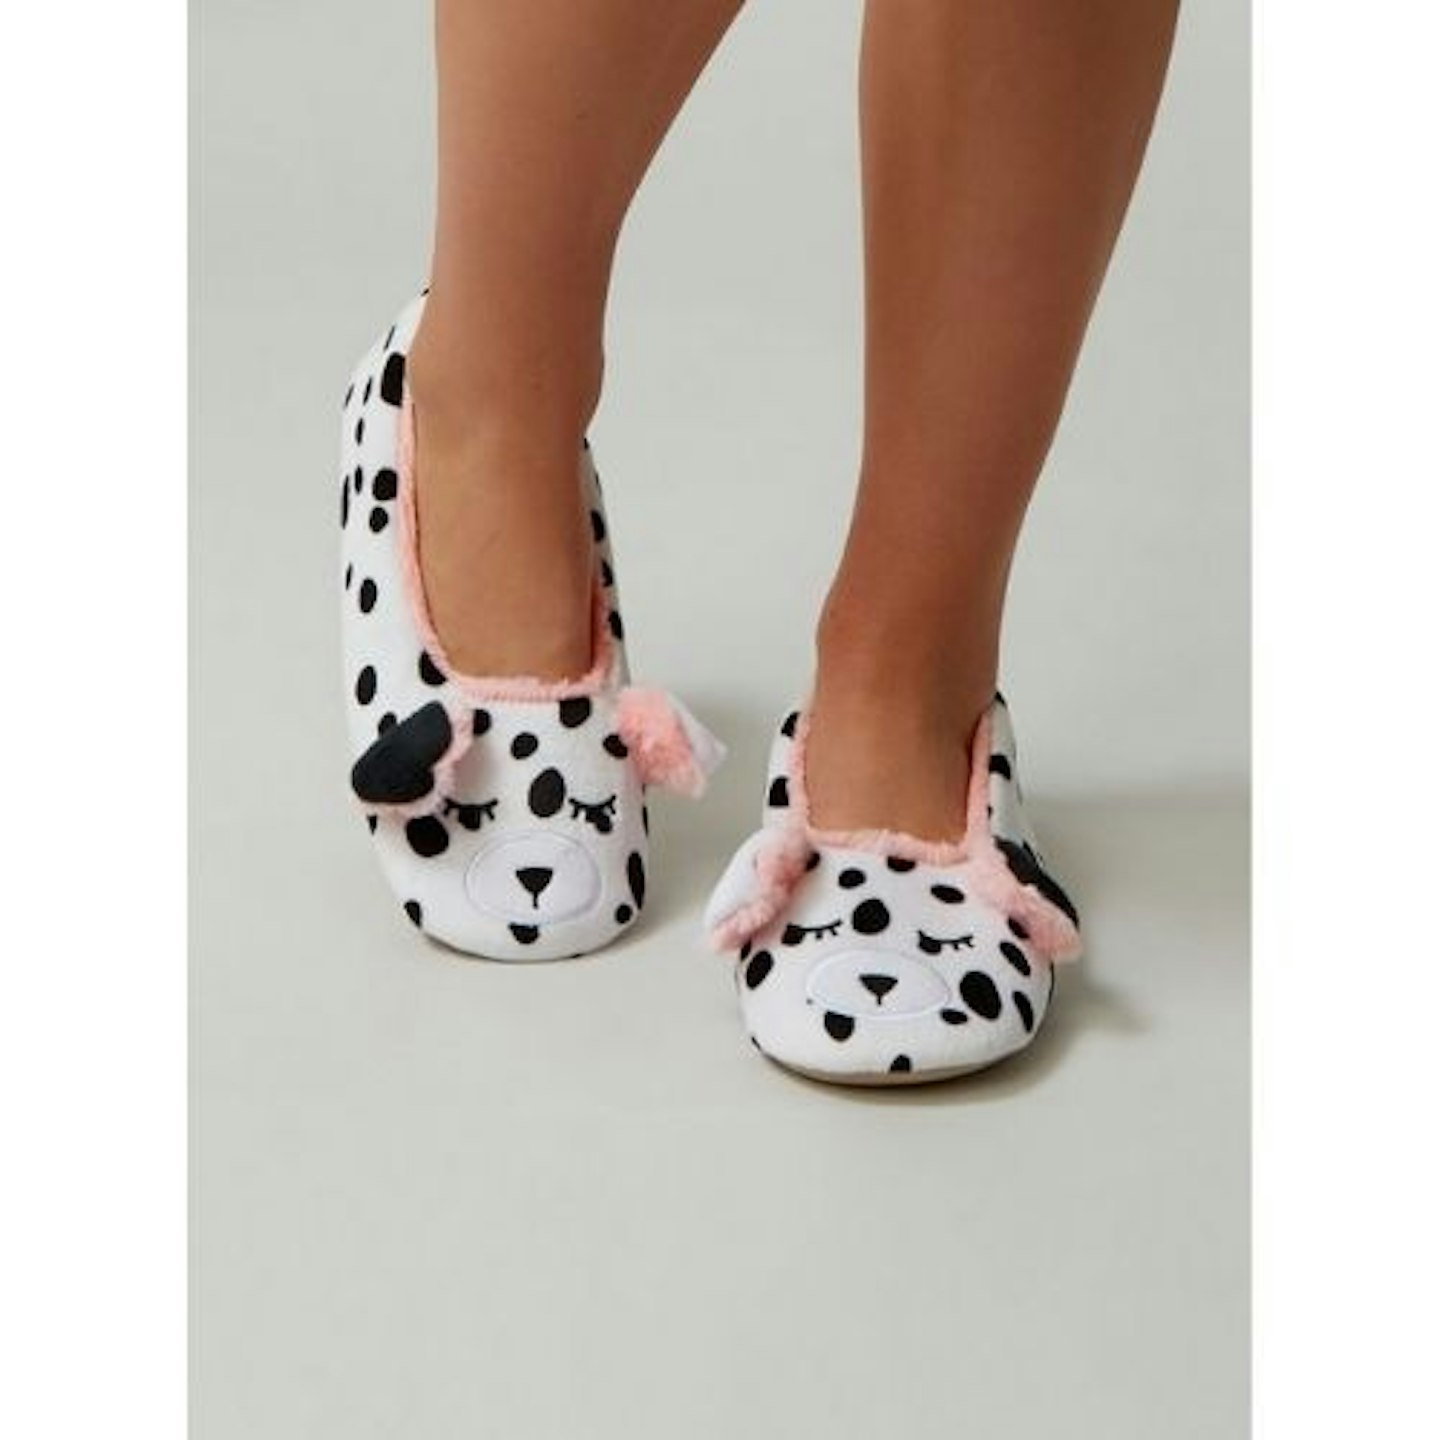 Dalmatian slippers